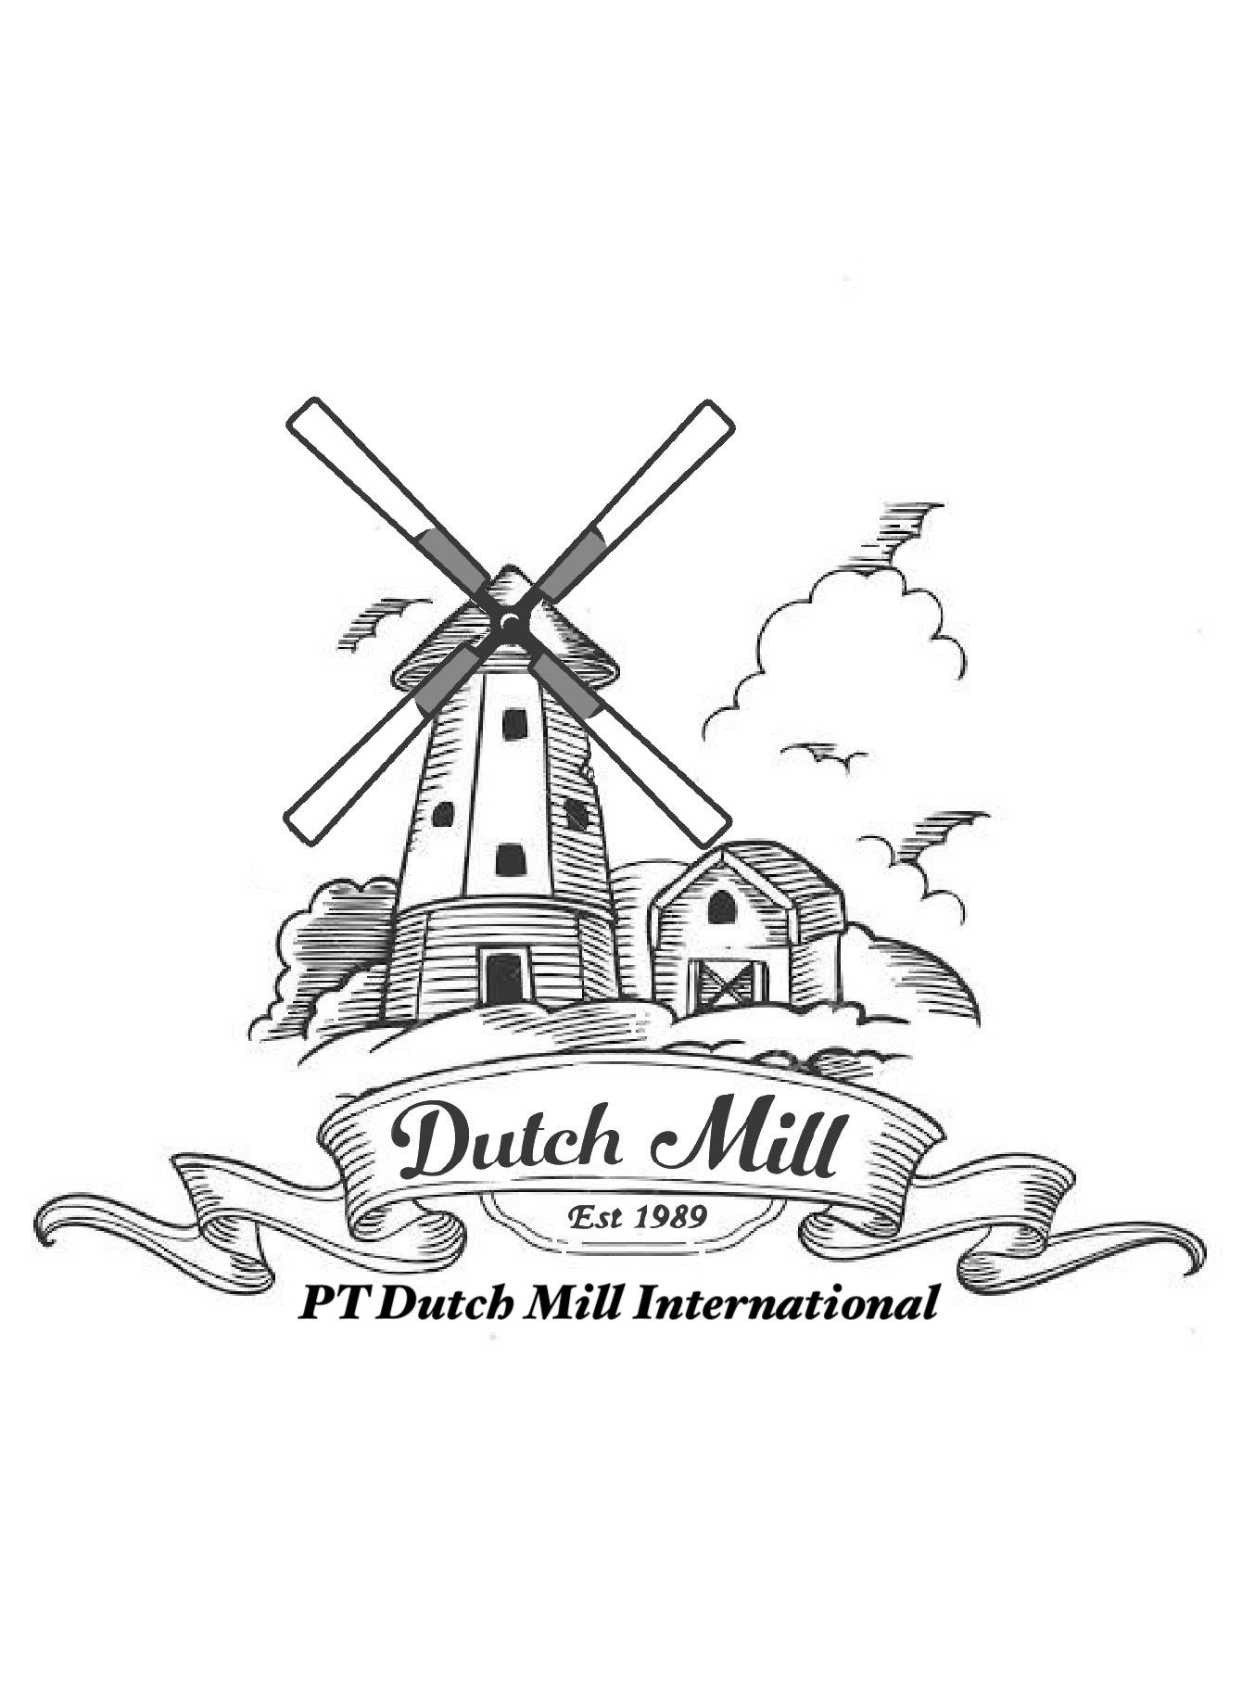 PT Dutch Mill International